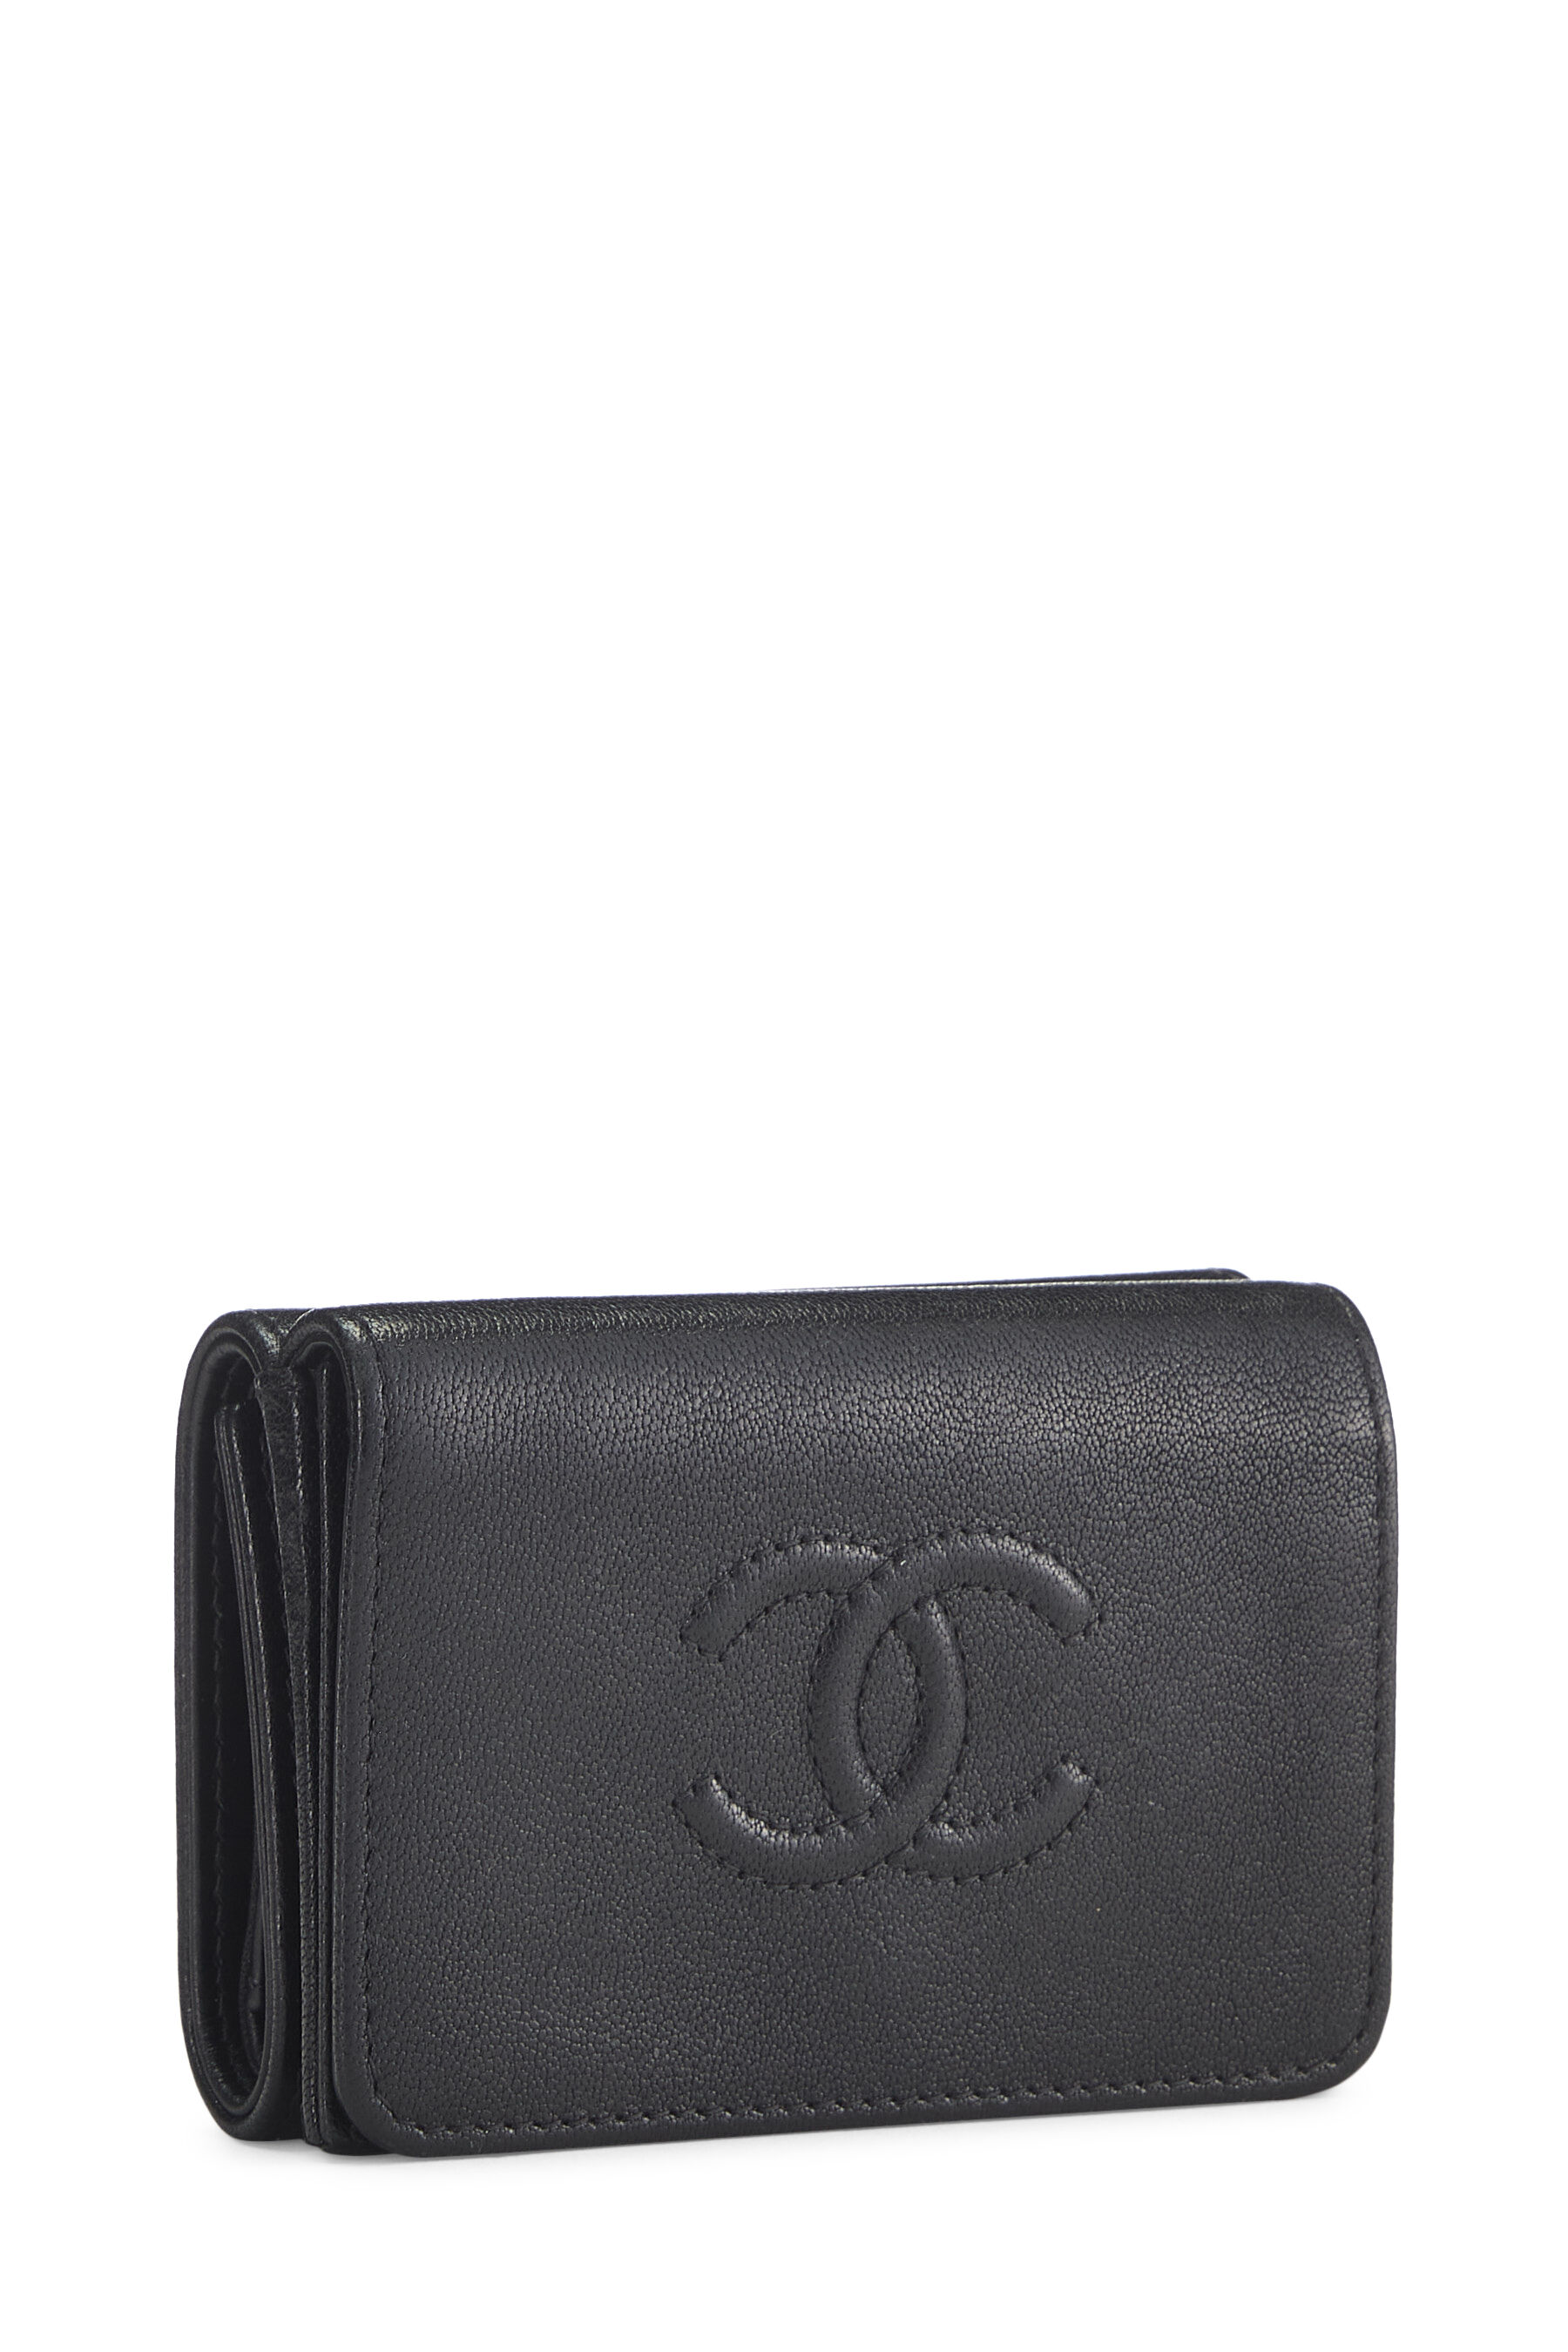 Chanel - Black Lambskin Timeless 'CC' Compact Wallet